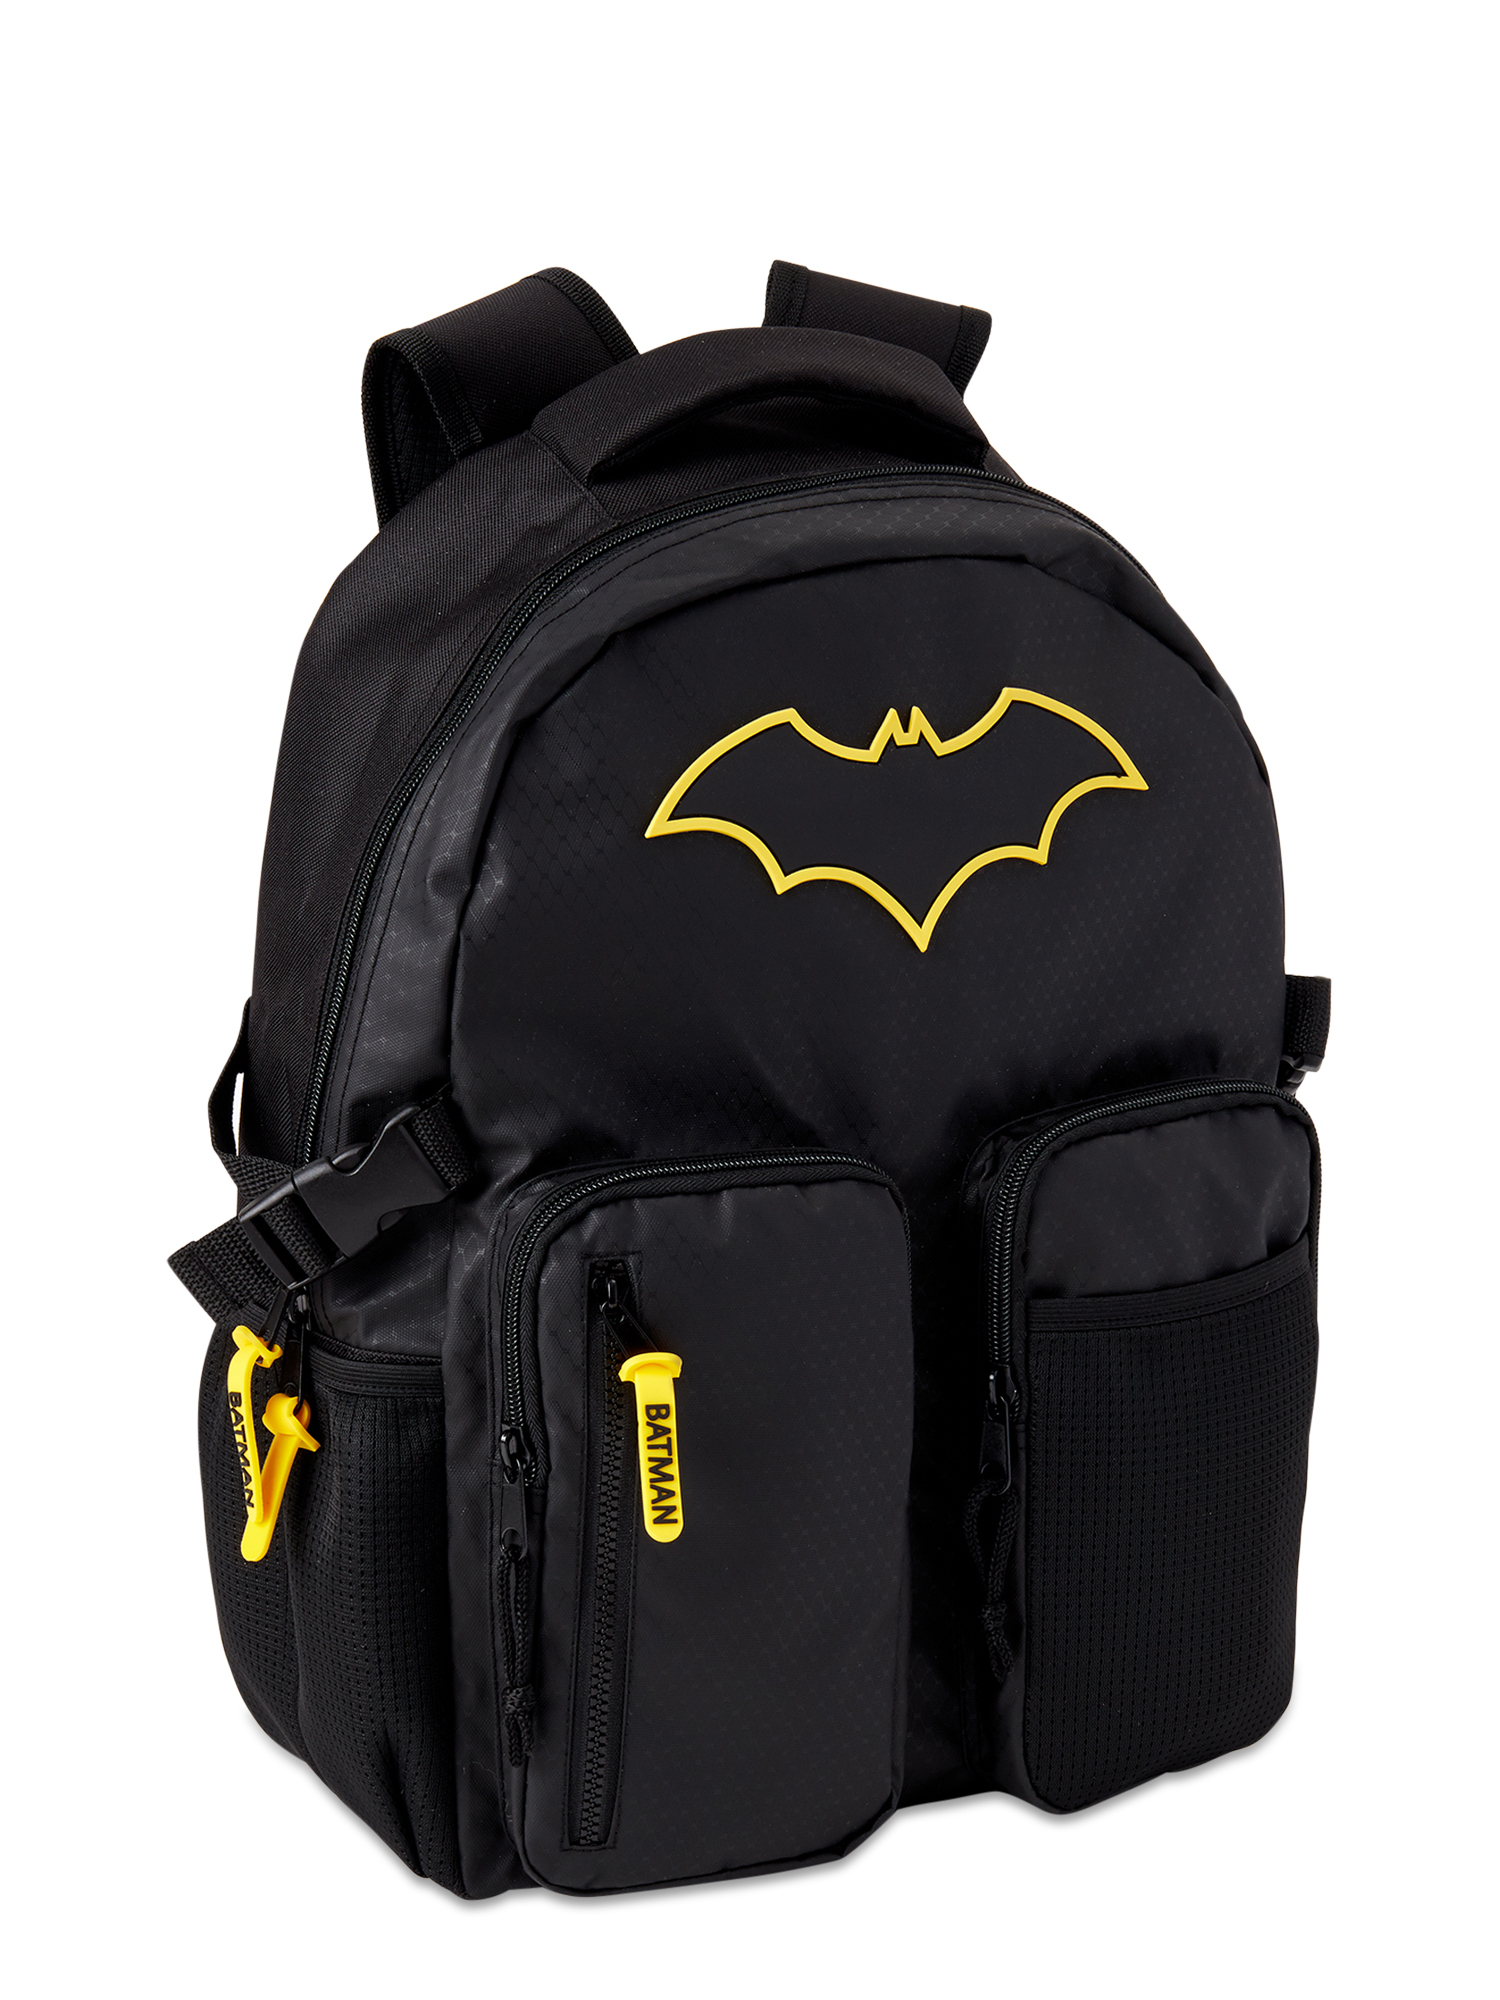 Warner Bros. DC Batman Kids Boys' Black Utility Backpack - image 3 of 4